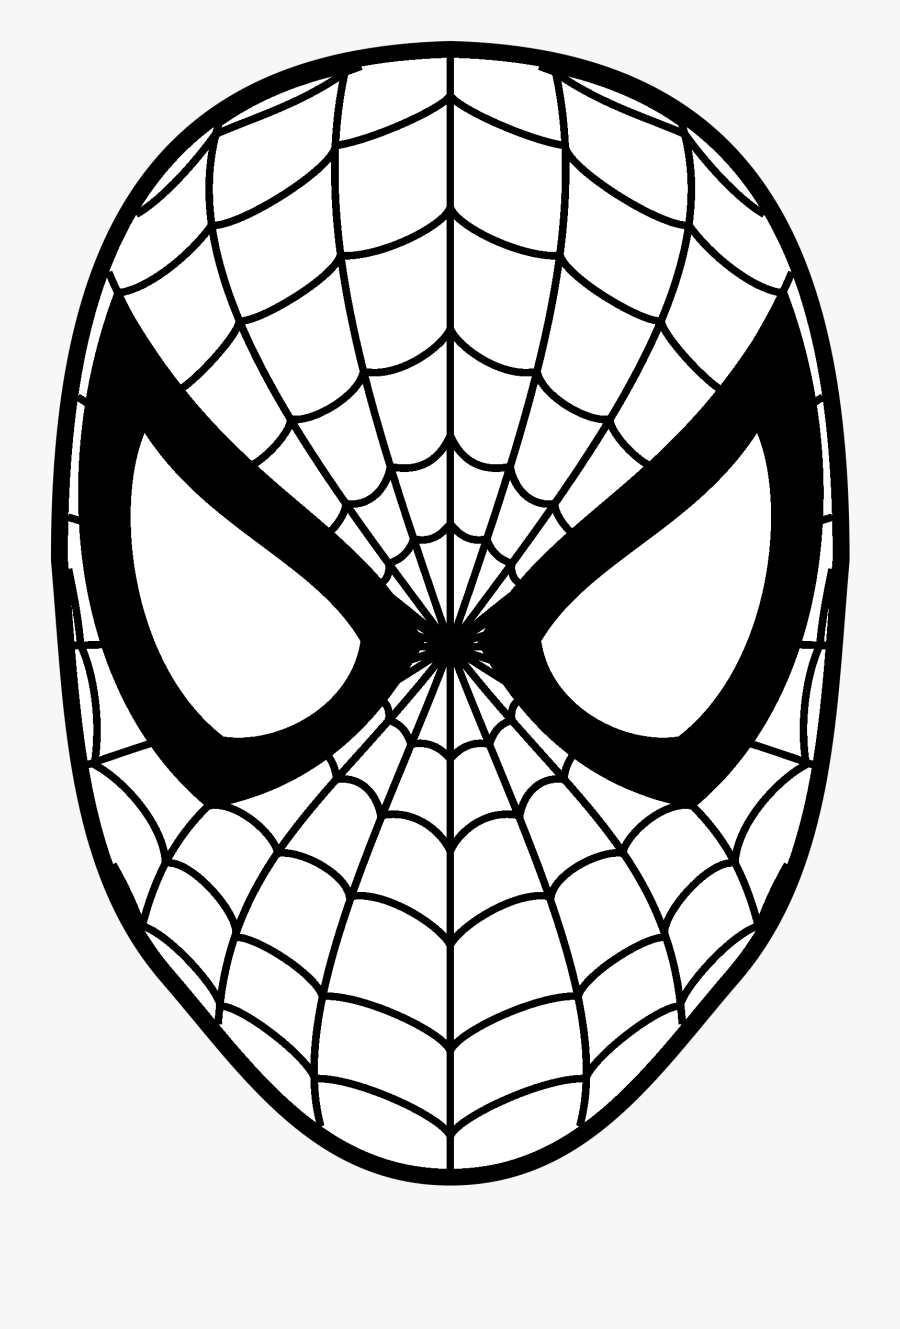 Download Free Spiderman Svg - Spiderman Svg Cut File Free ...